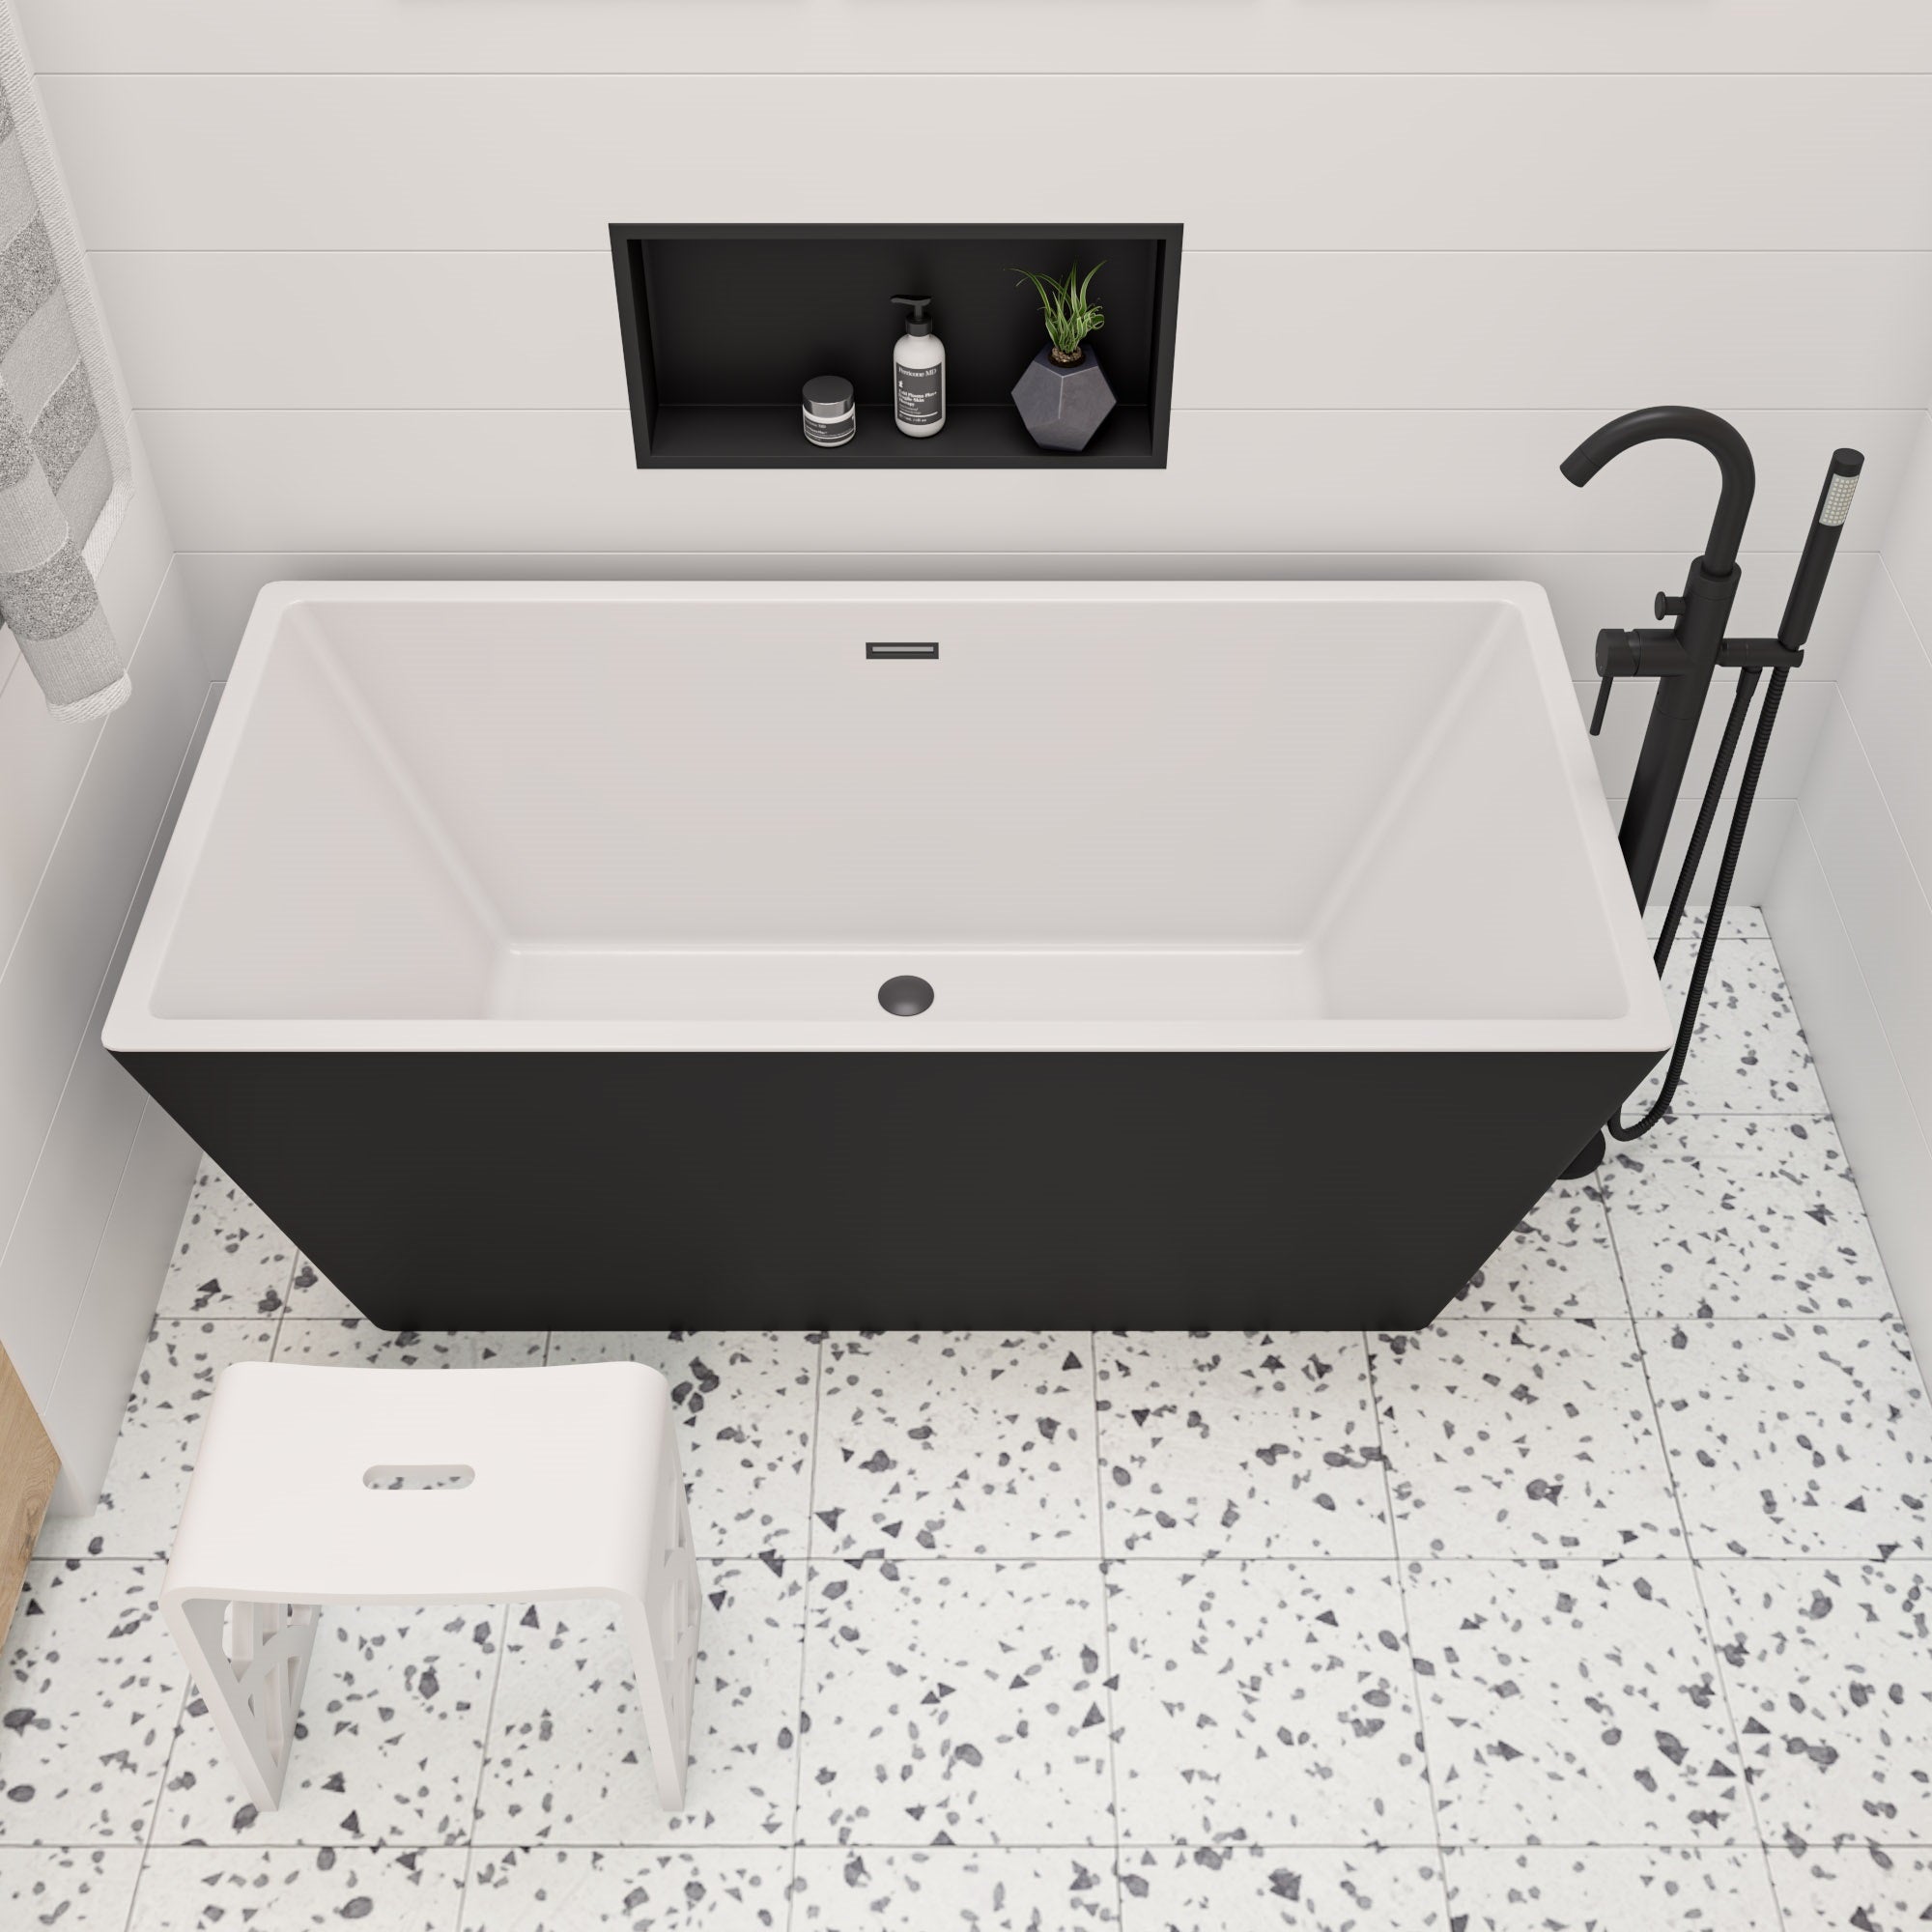 ALFI Brand - 24 x 12 Black Matte Stainless Steel Horizontal Single Shelf Bath Shower Niche | ABNC2412-BLA